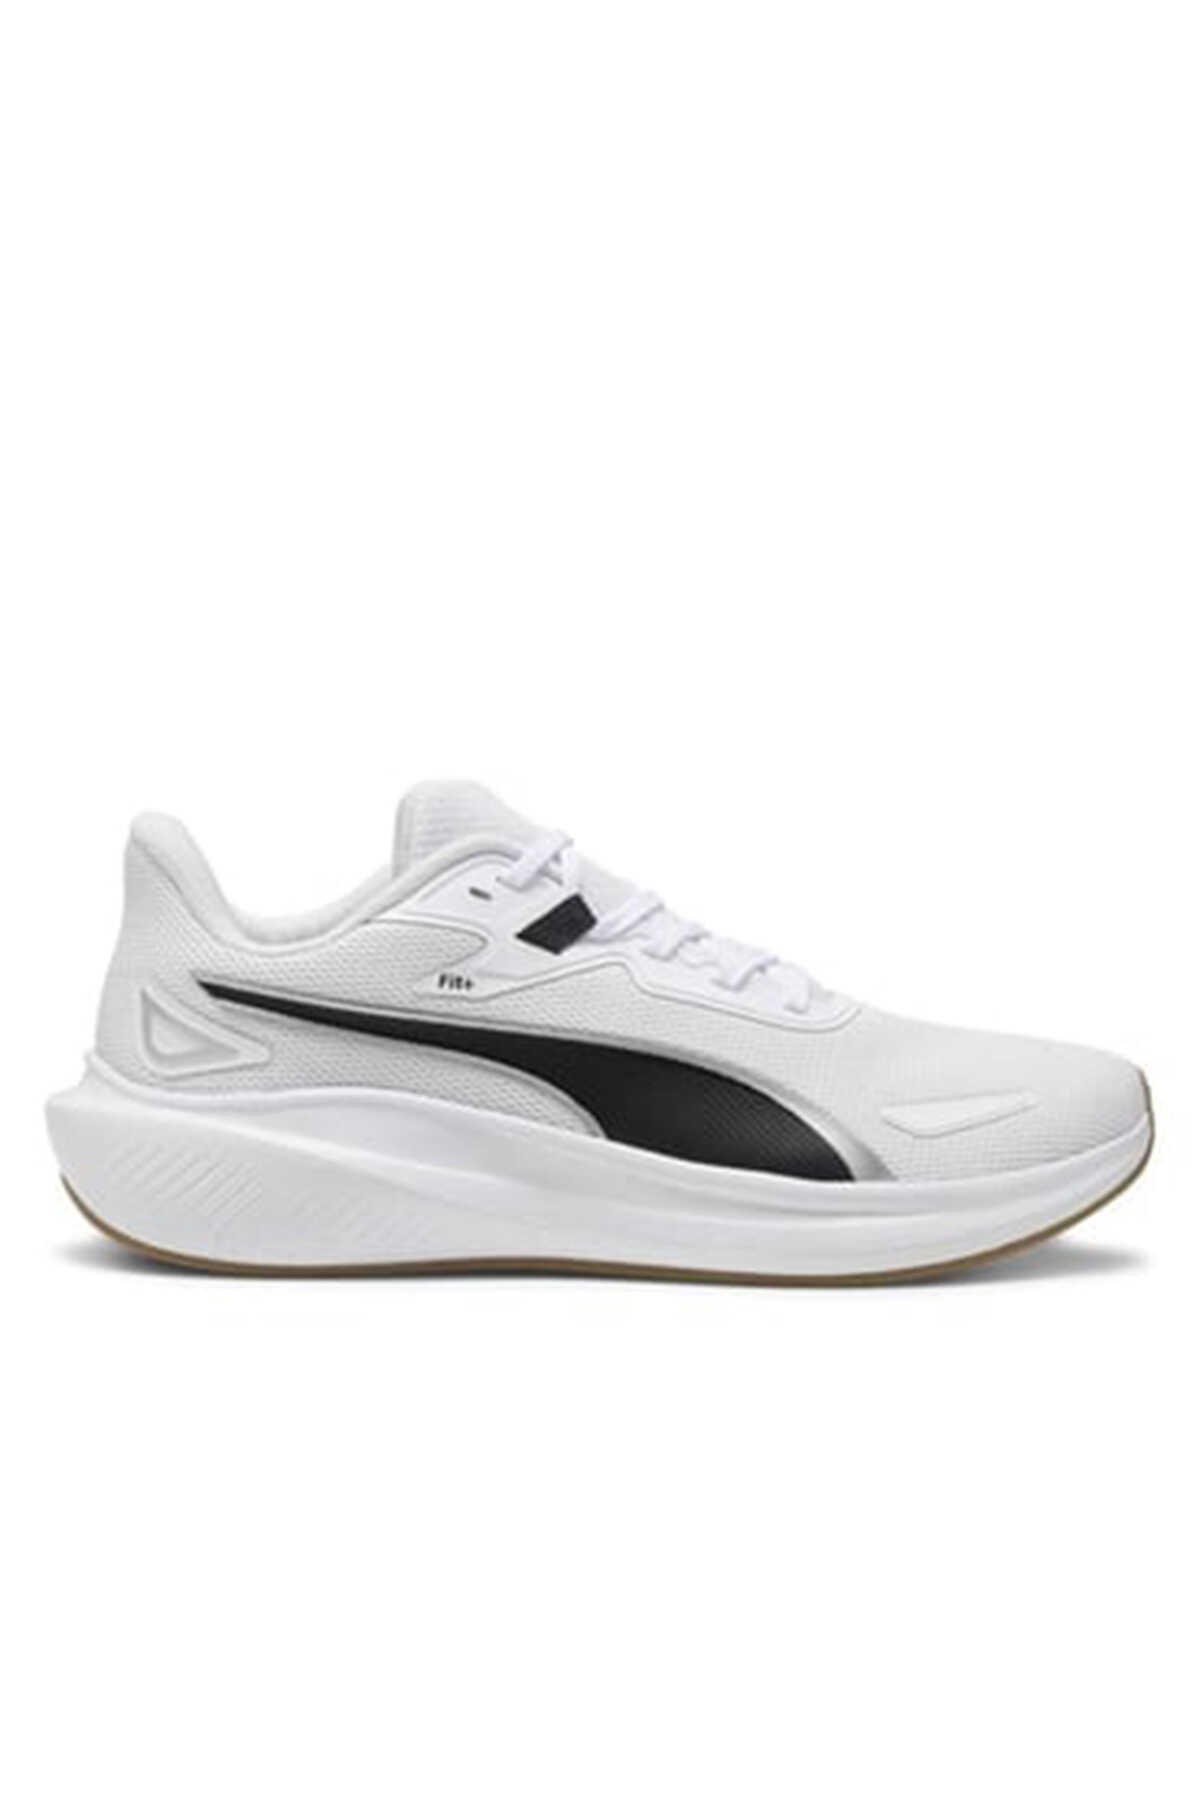 Puma - Puma Skyrocket Lite Erkek Sneaker Ayakkabı Beyaz / Siyah